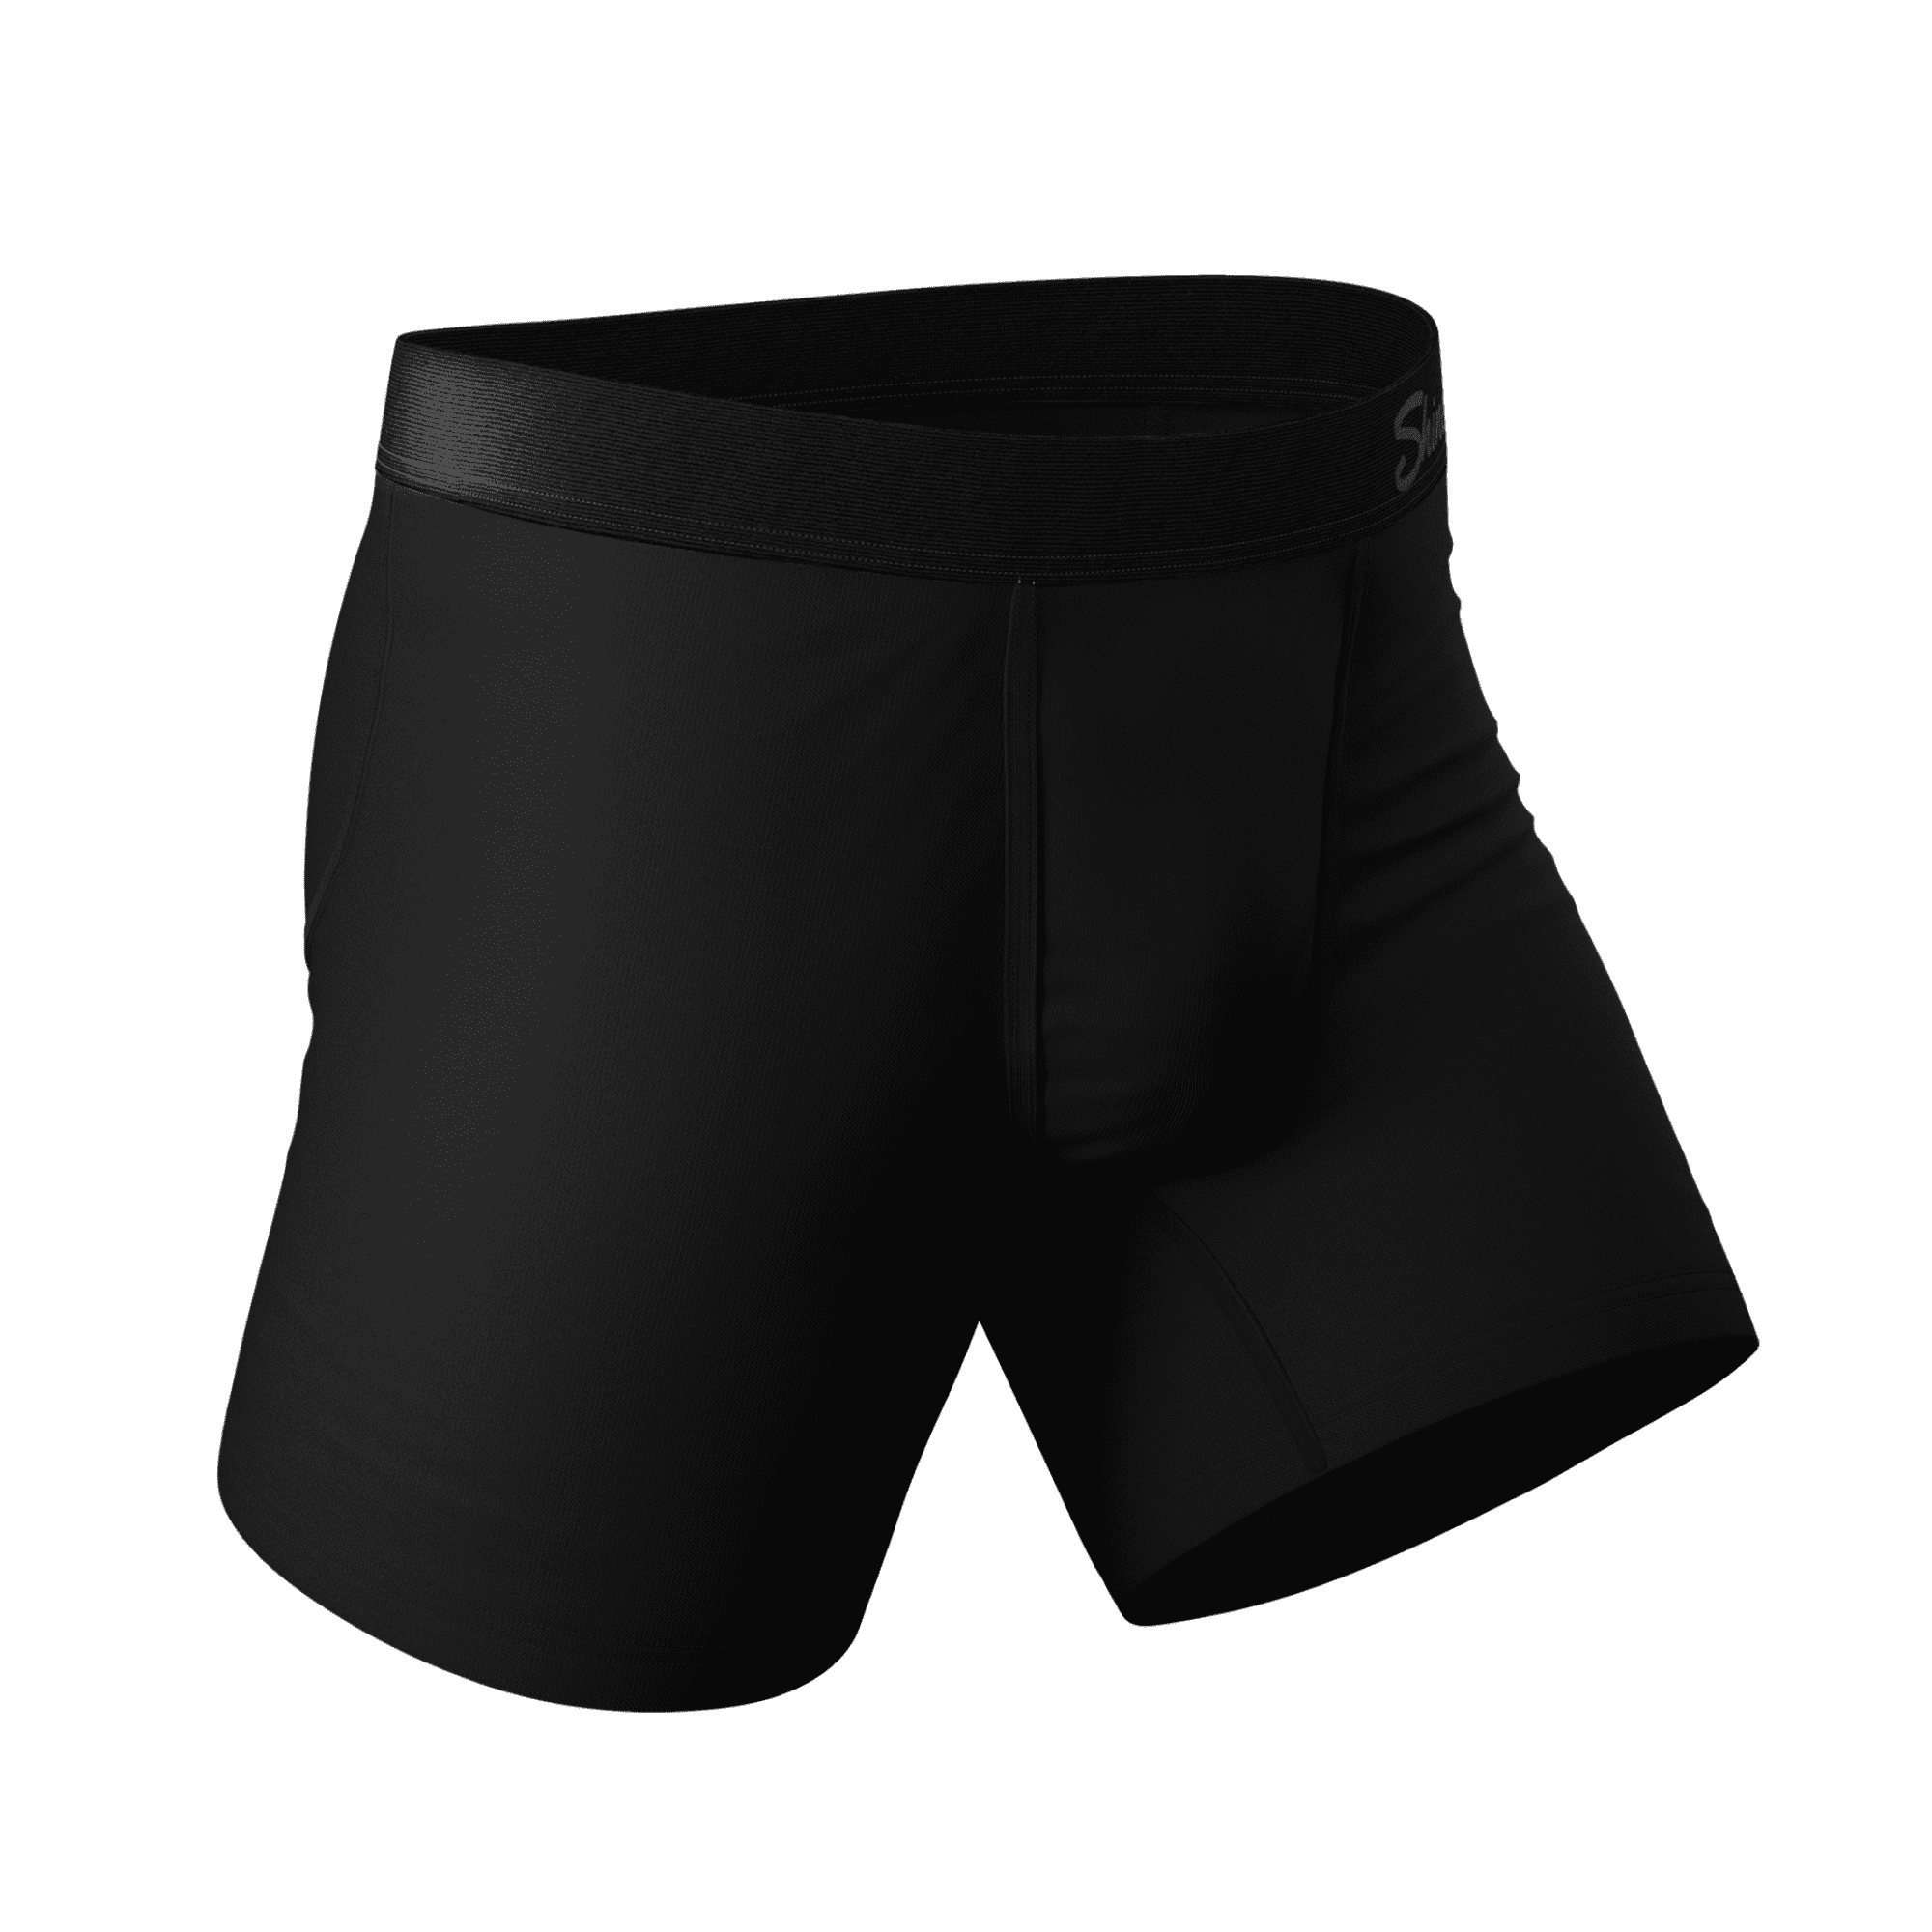 The Threat Level Midnight // Black Ball Hammock® Pouch Underwear With Fly ( XL) - Shinesty Underwear, Shorts, & Trunks - Touch of Modern